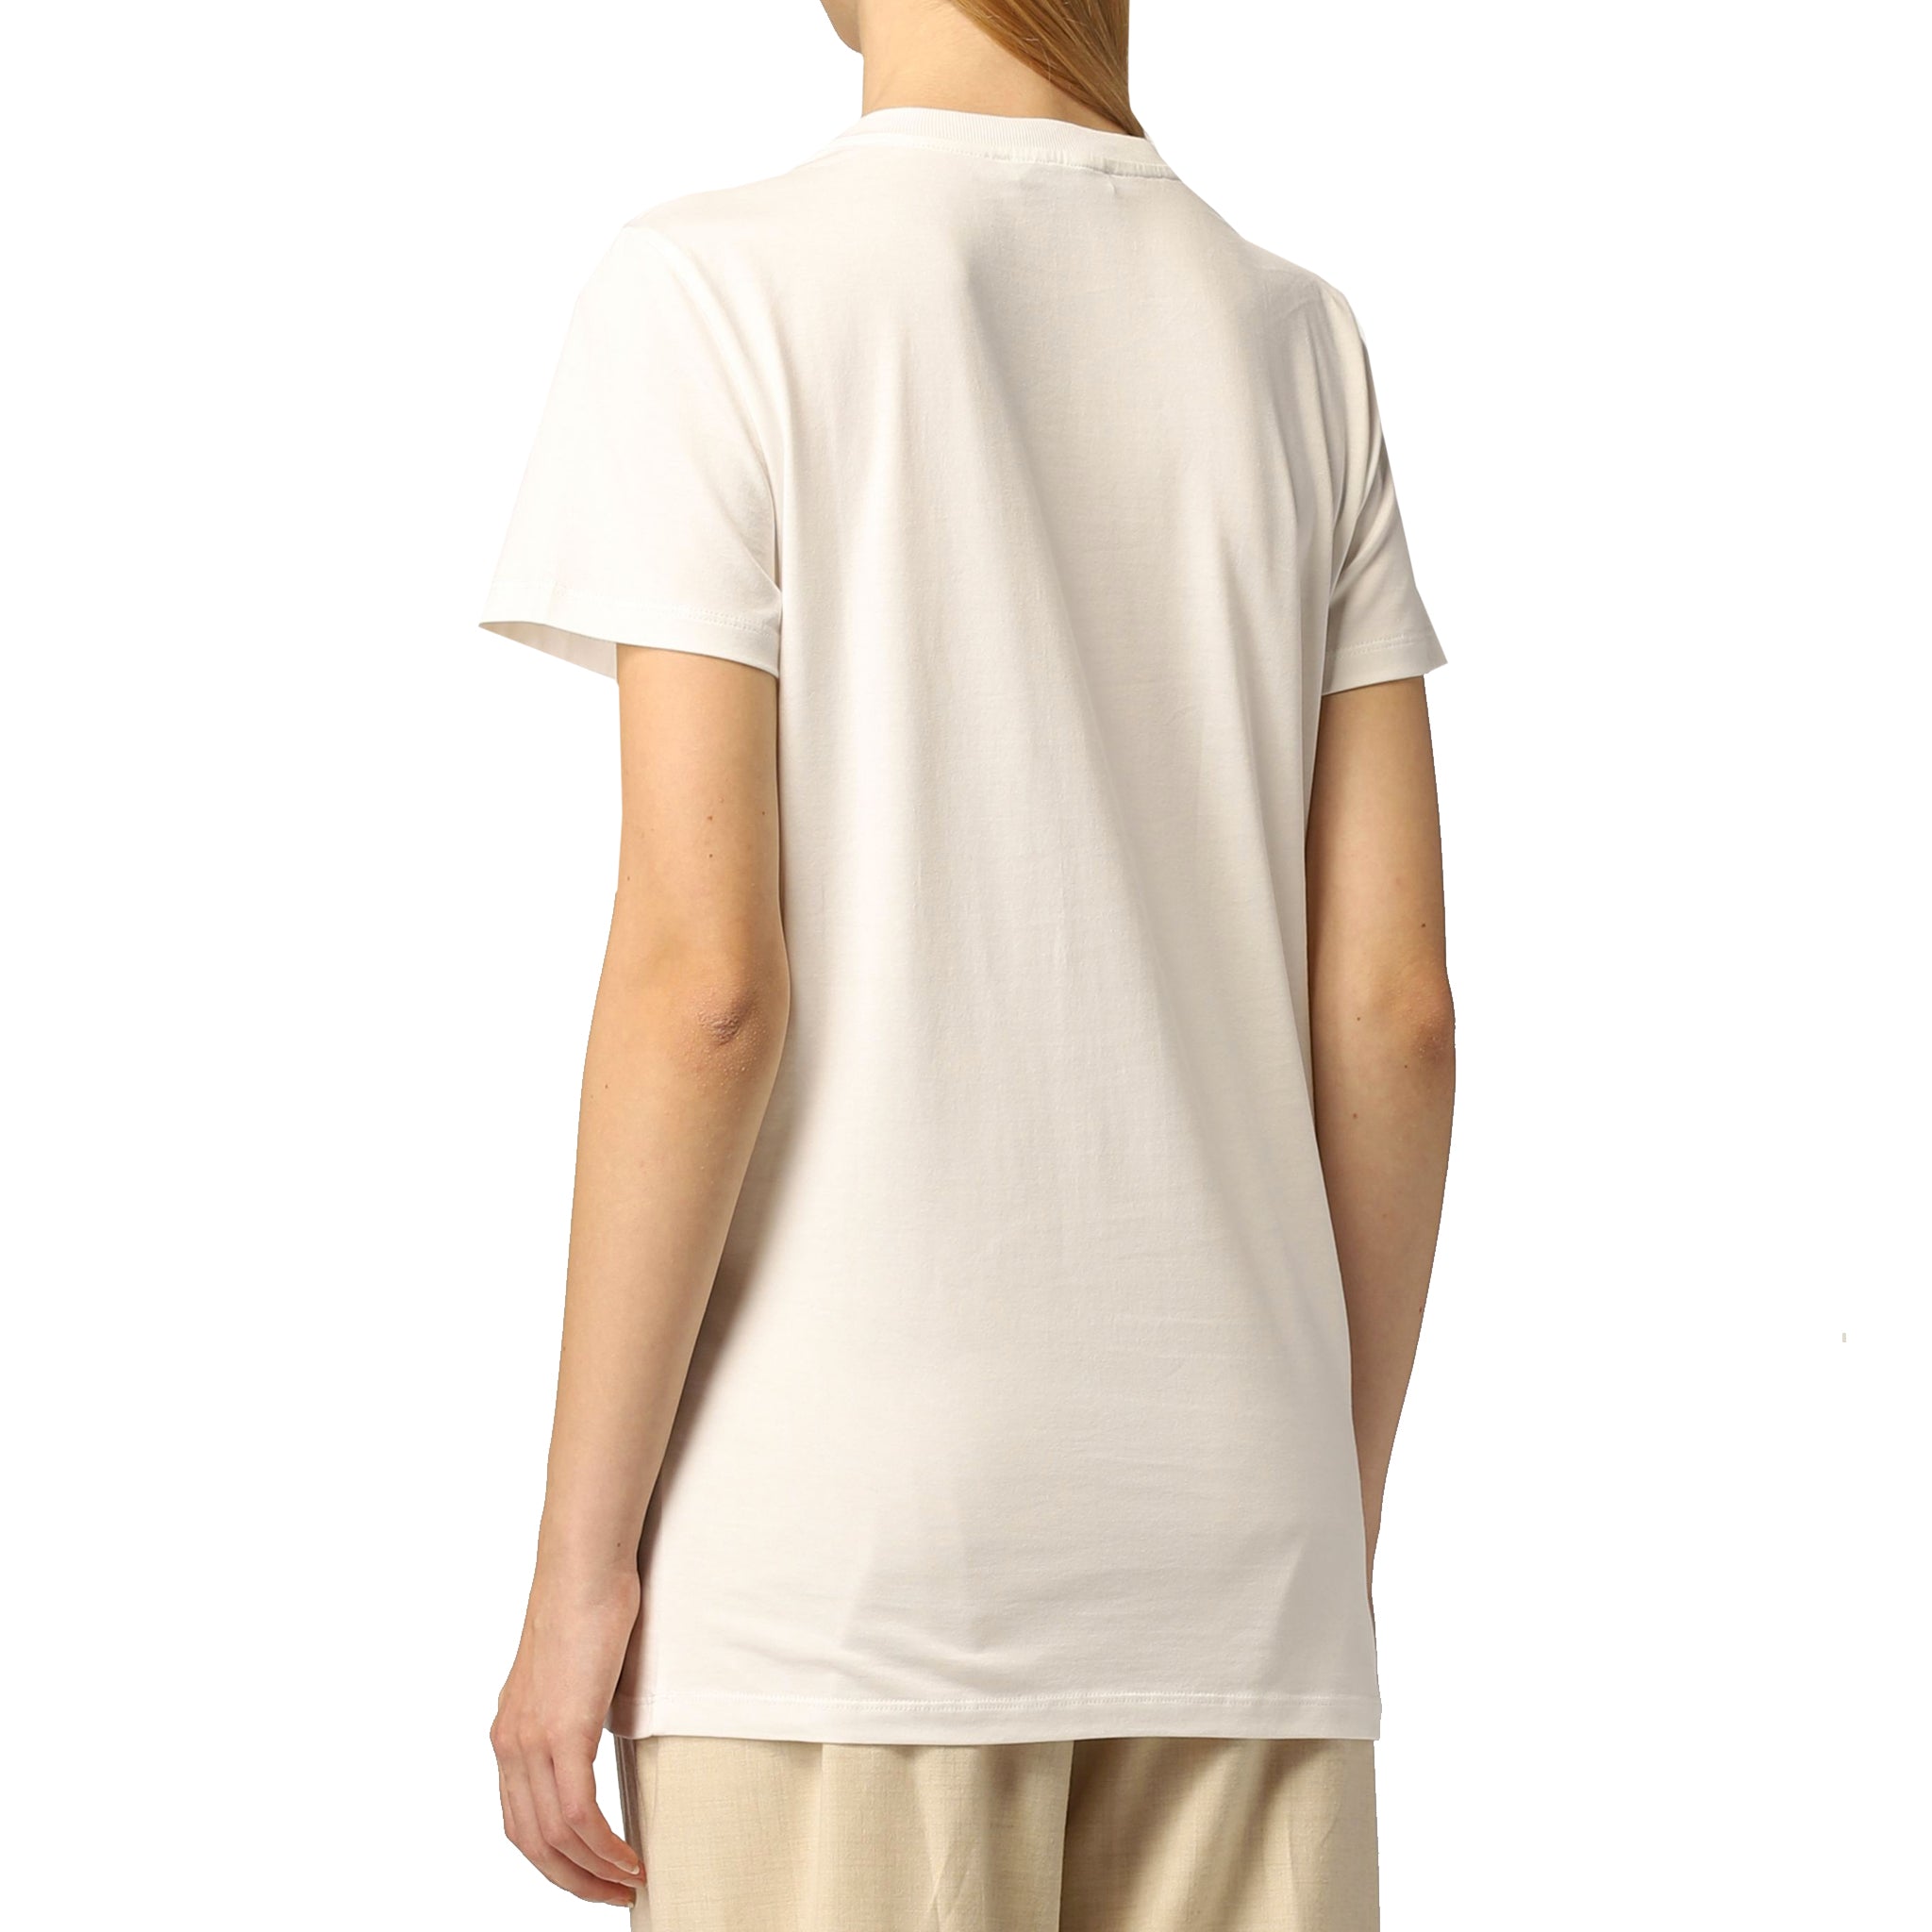 MAX-MARA-OUTLET-SALE-Max-Mara-Cotton-Logo-T-Shirt-Shirts-ARCHIVE-COLLECTION-3.jpg